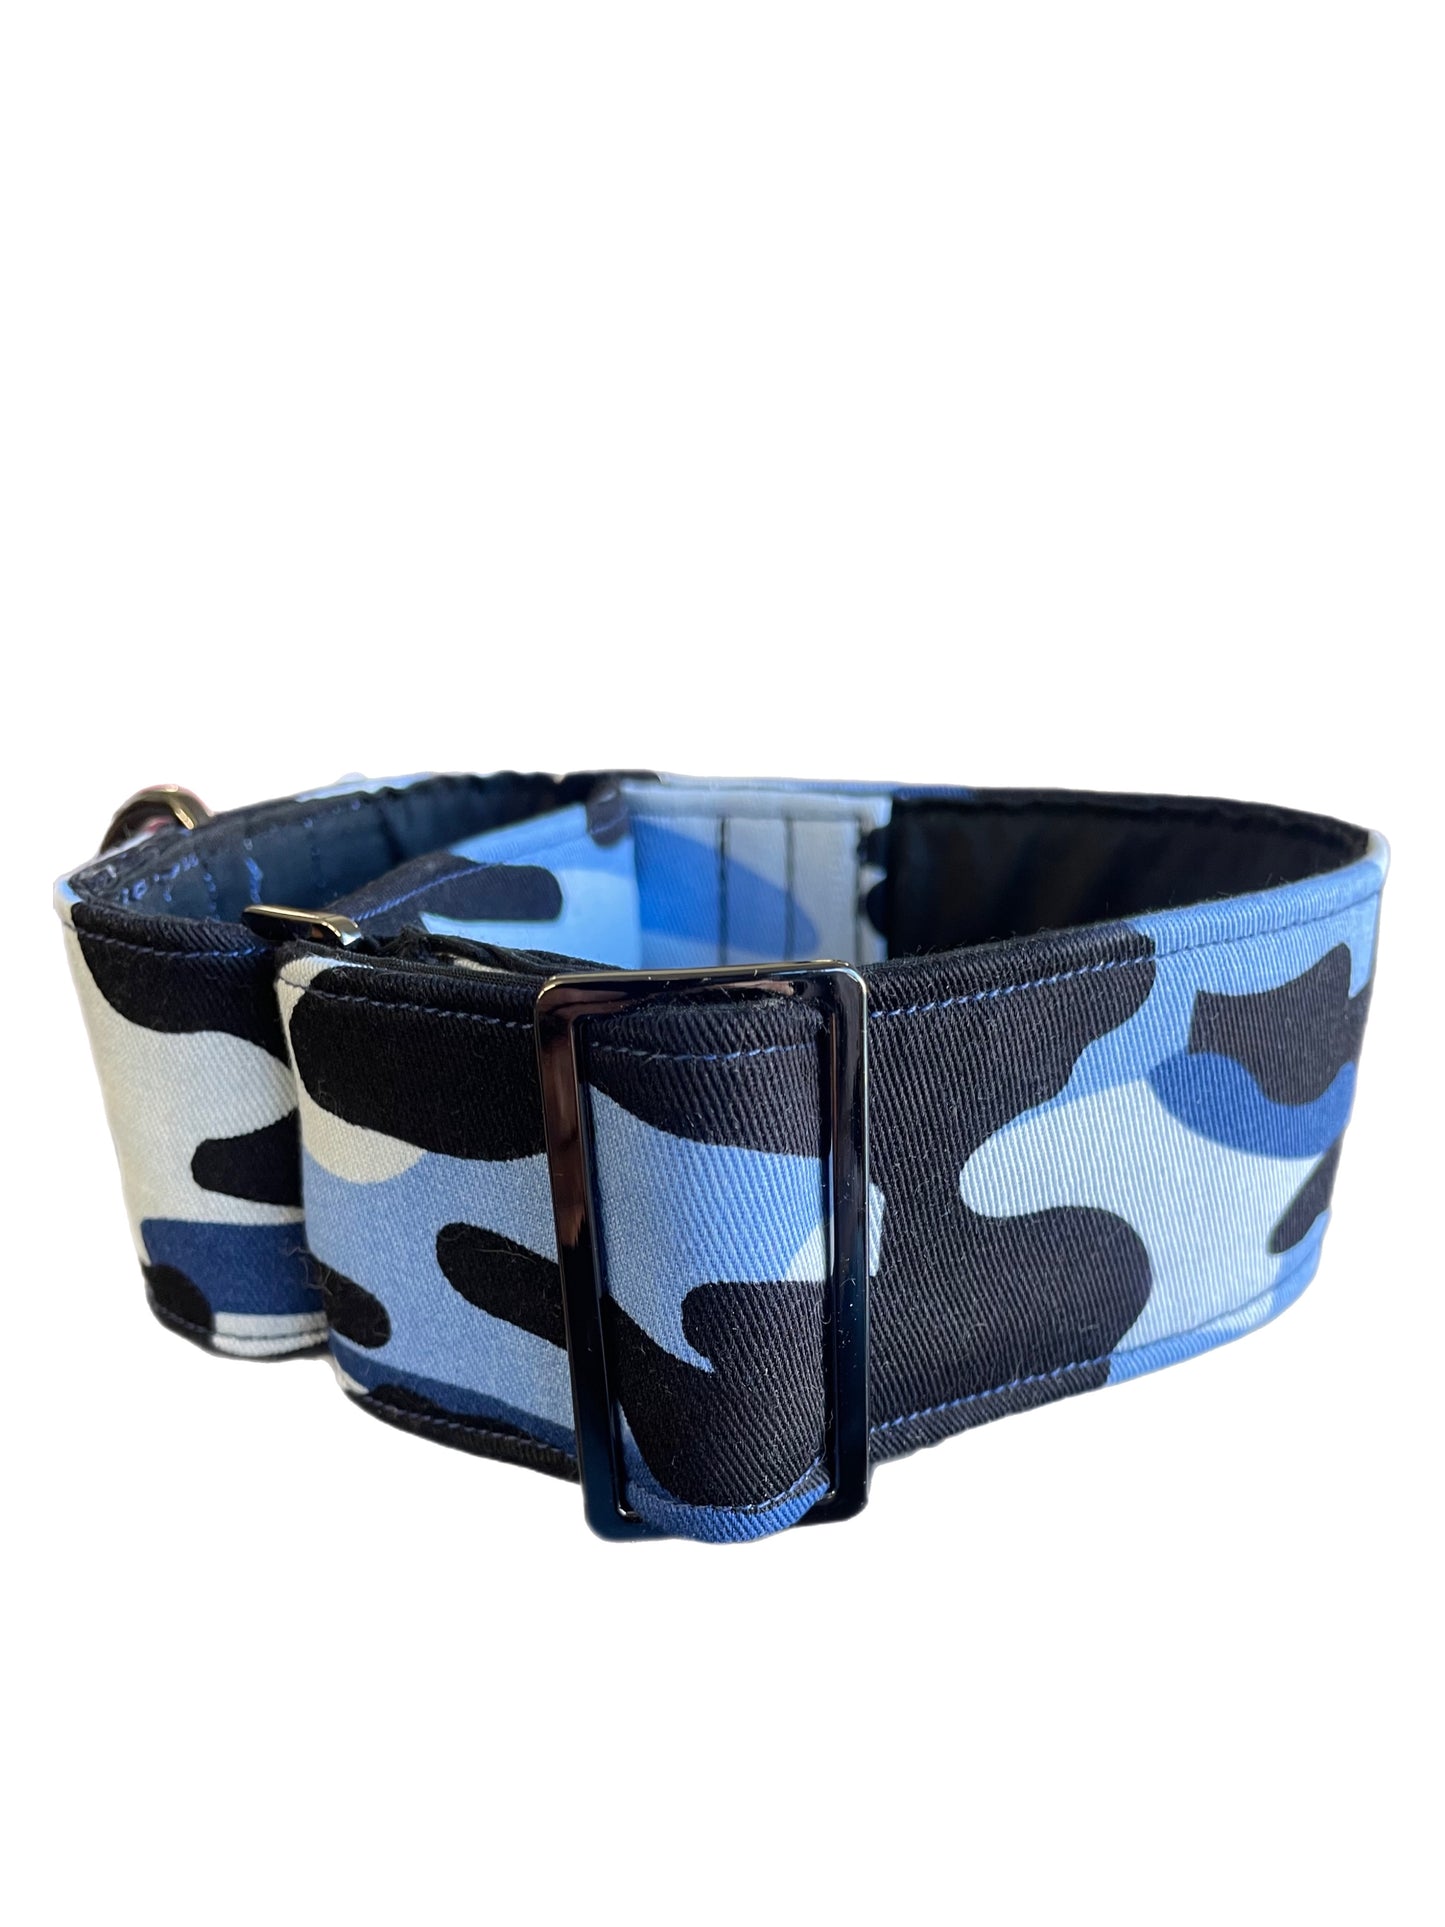 Martingale collar greyhound collar navy blue Cammo design cotton fabric